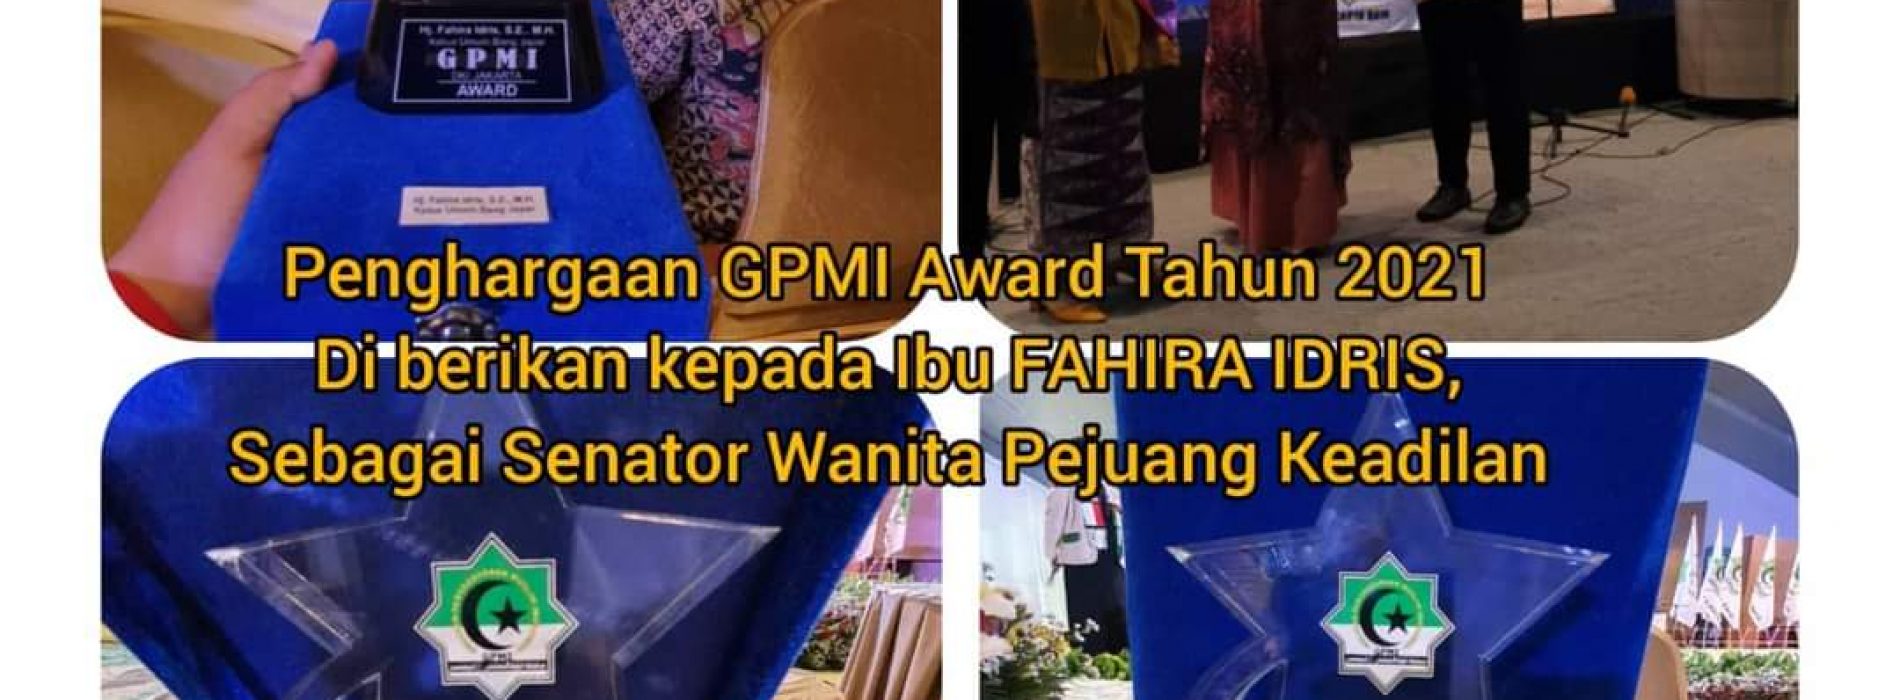 Fahira Idris Terima Award di Milad GPMI Ke-23 Tahun